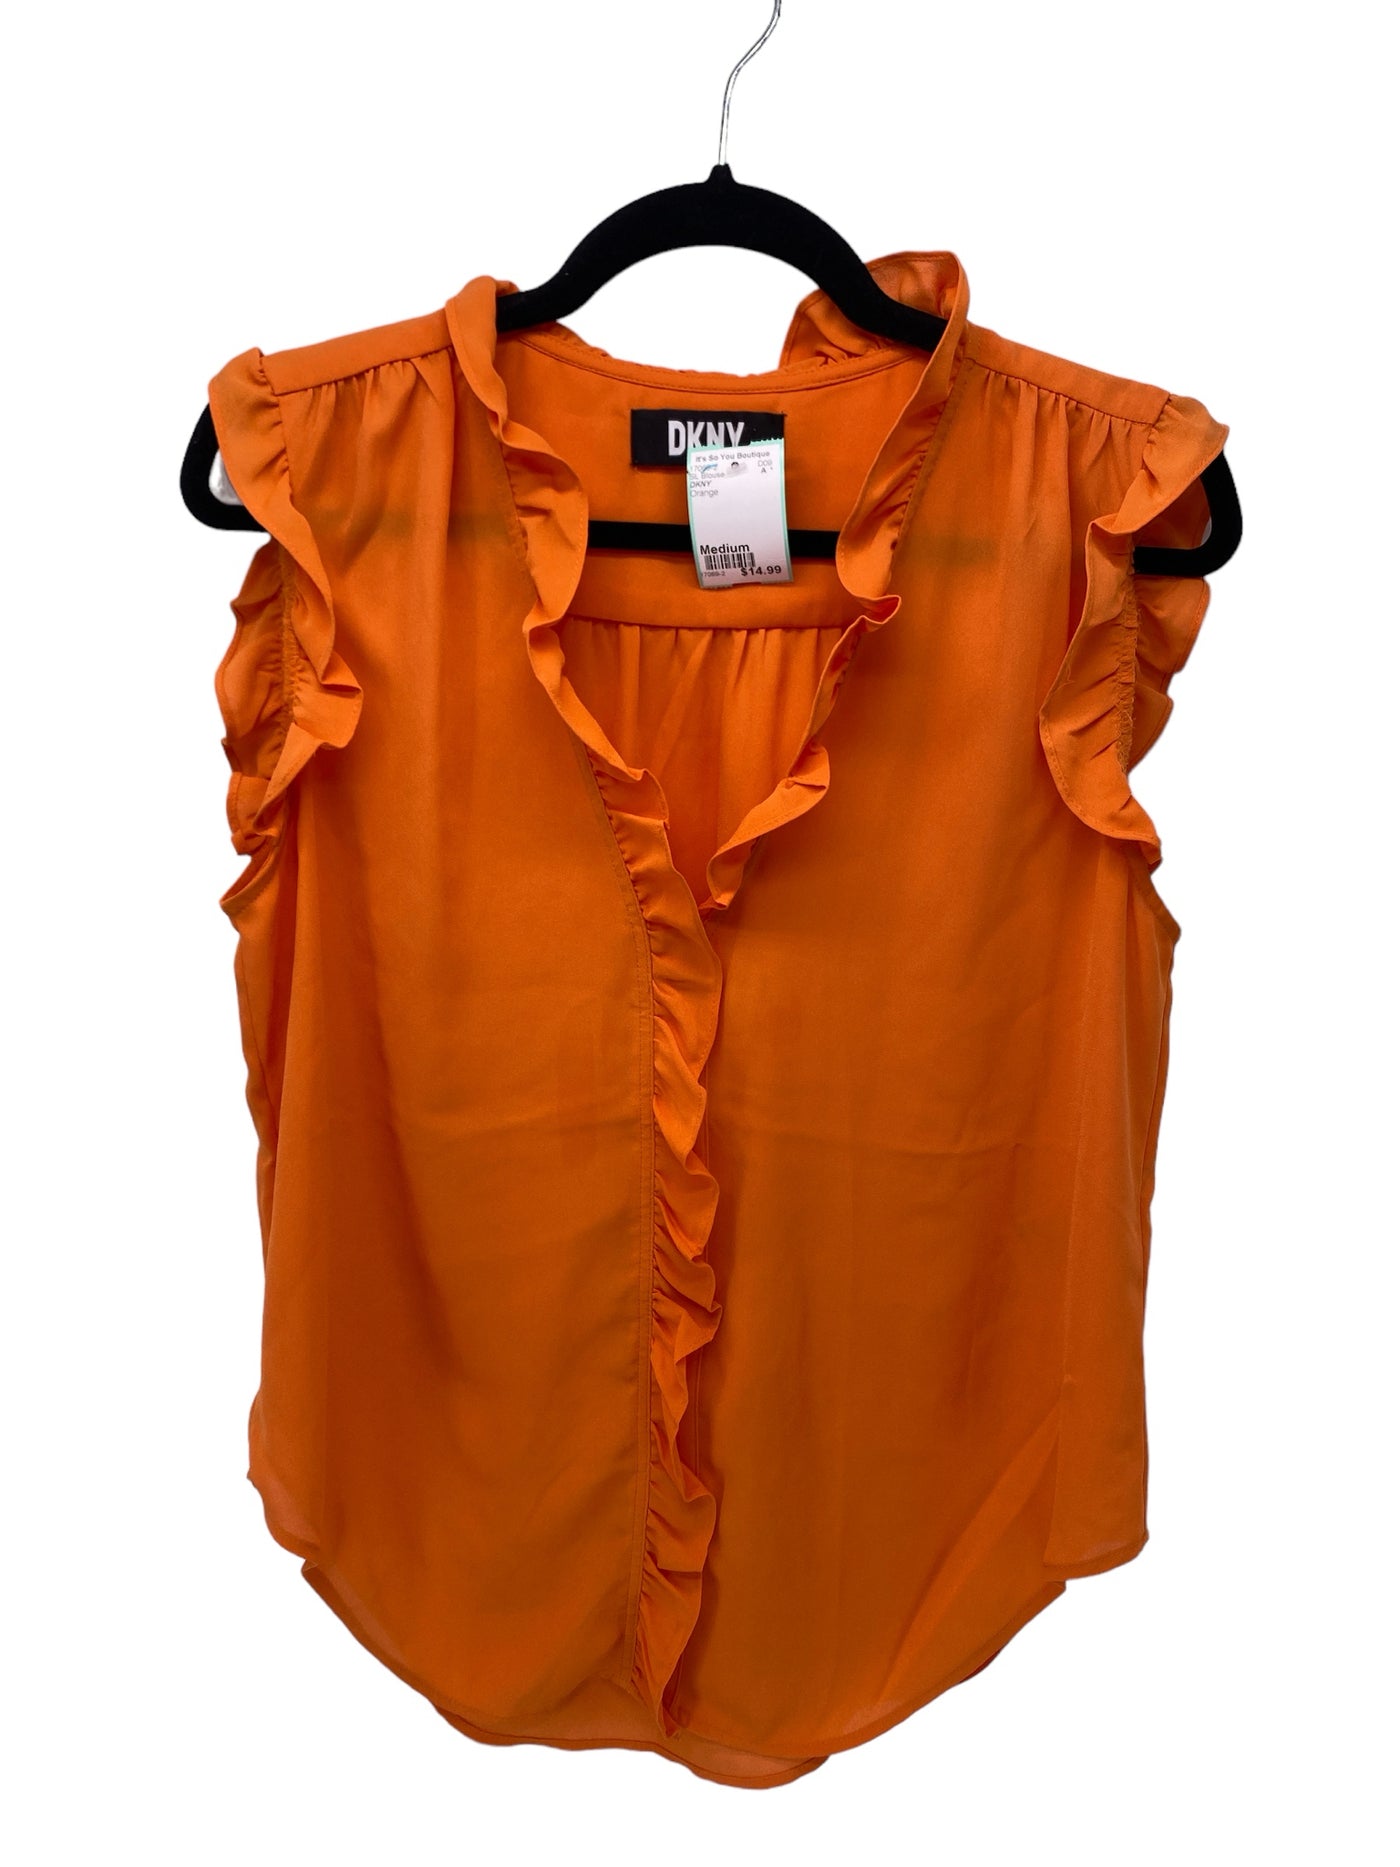 DKNY Misses Size Medium Orange SL Blouse